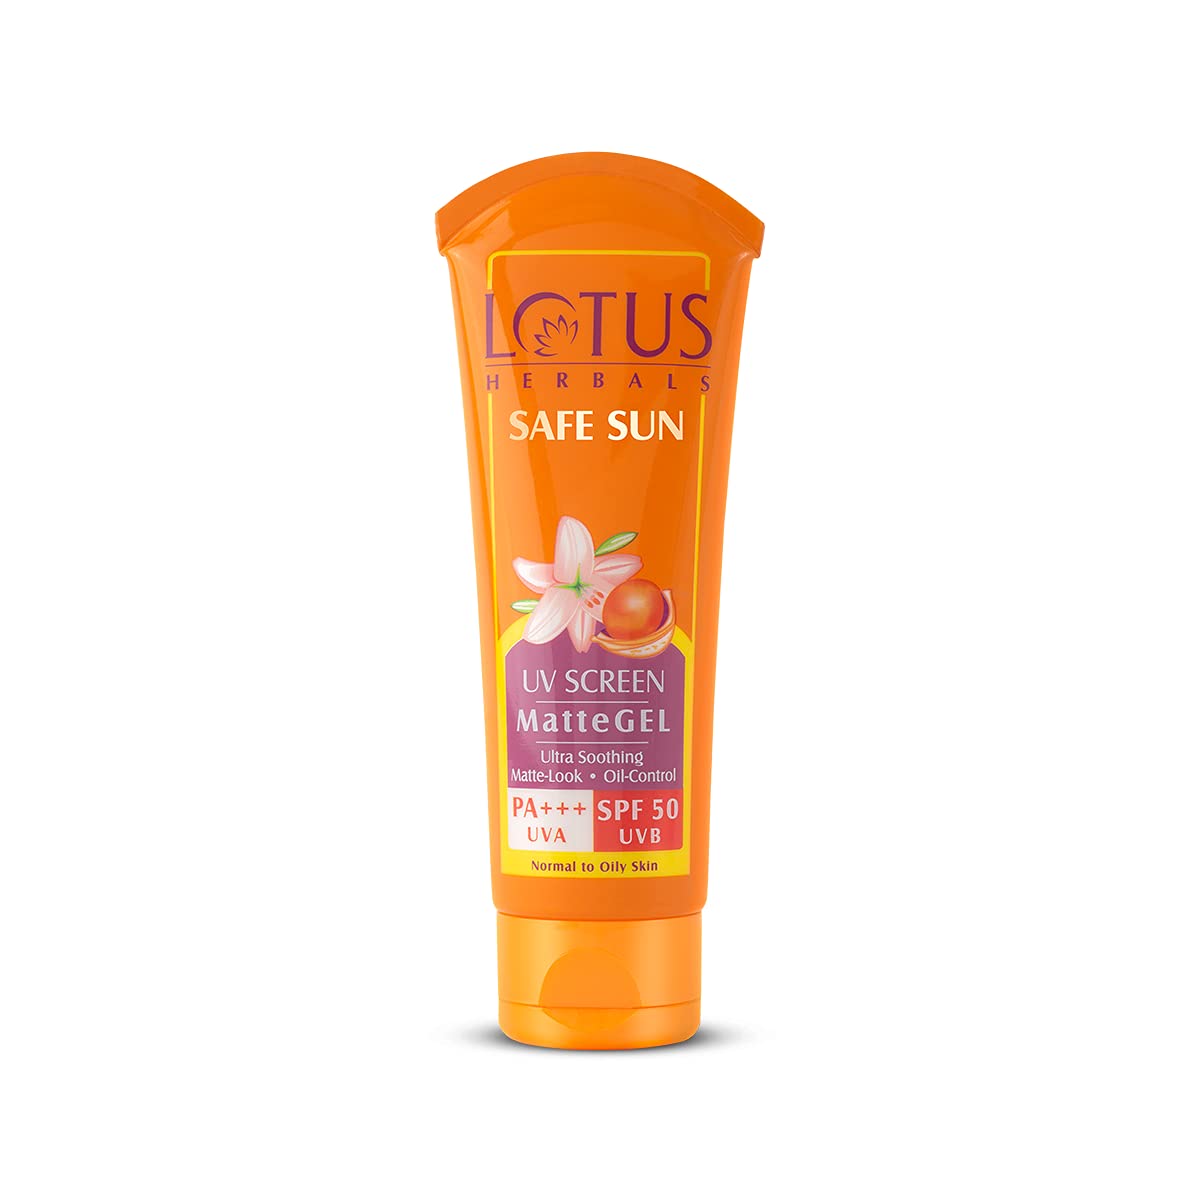 Lotus Herbals Safe Sun UV Sunscreen Matte Gel PA+++ Spf 50 (100gm)